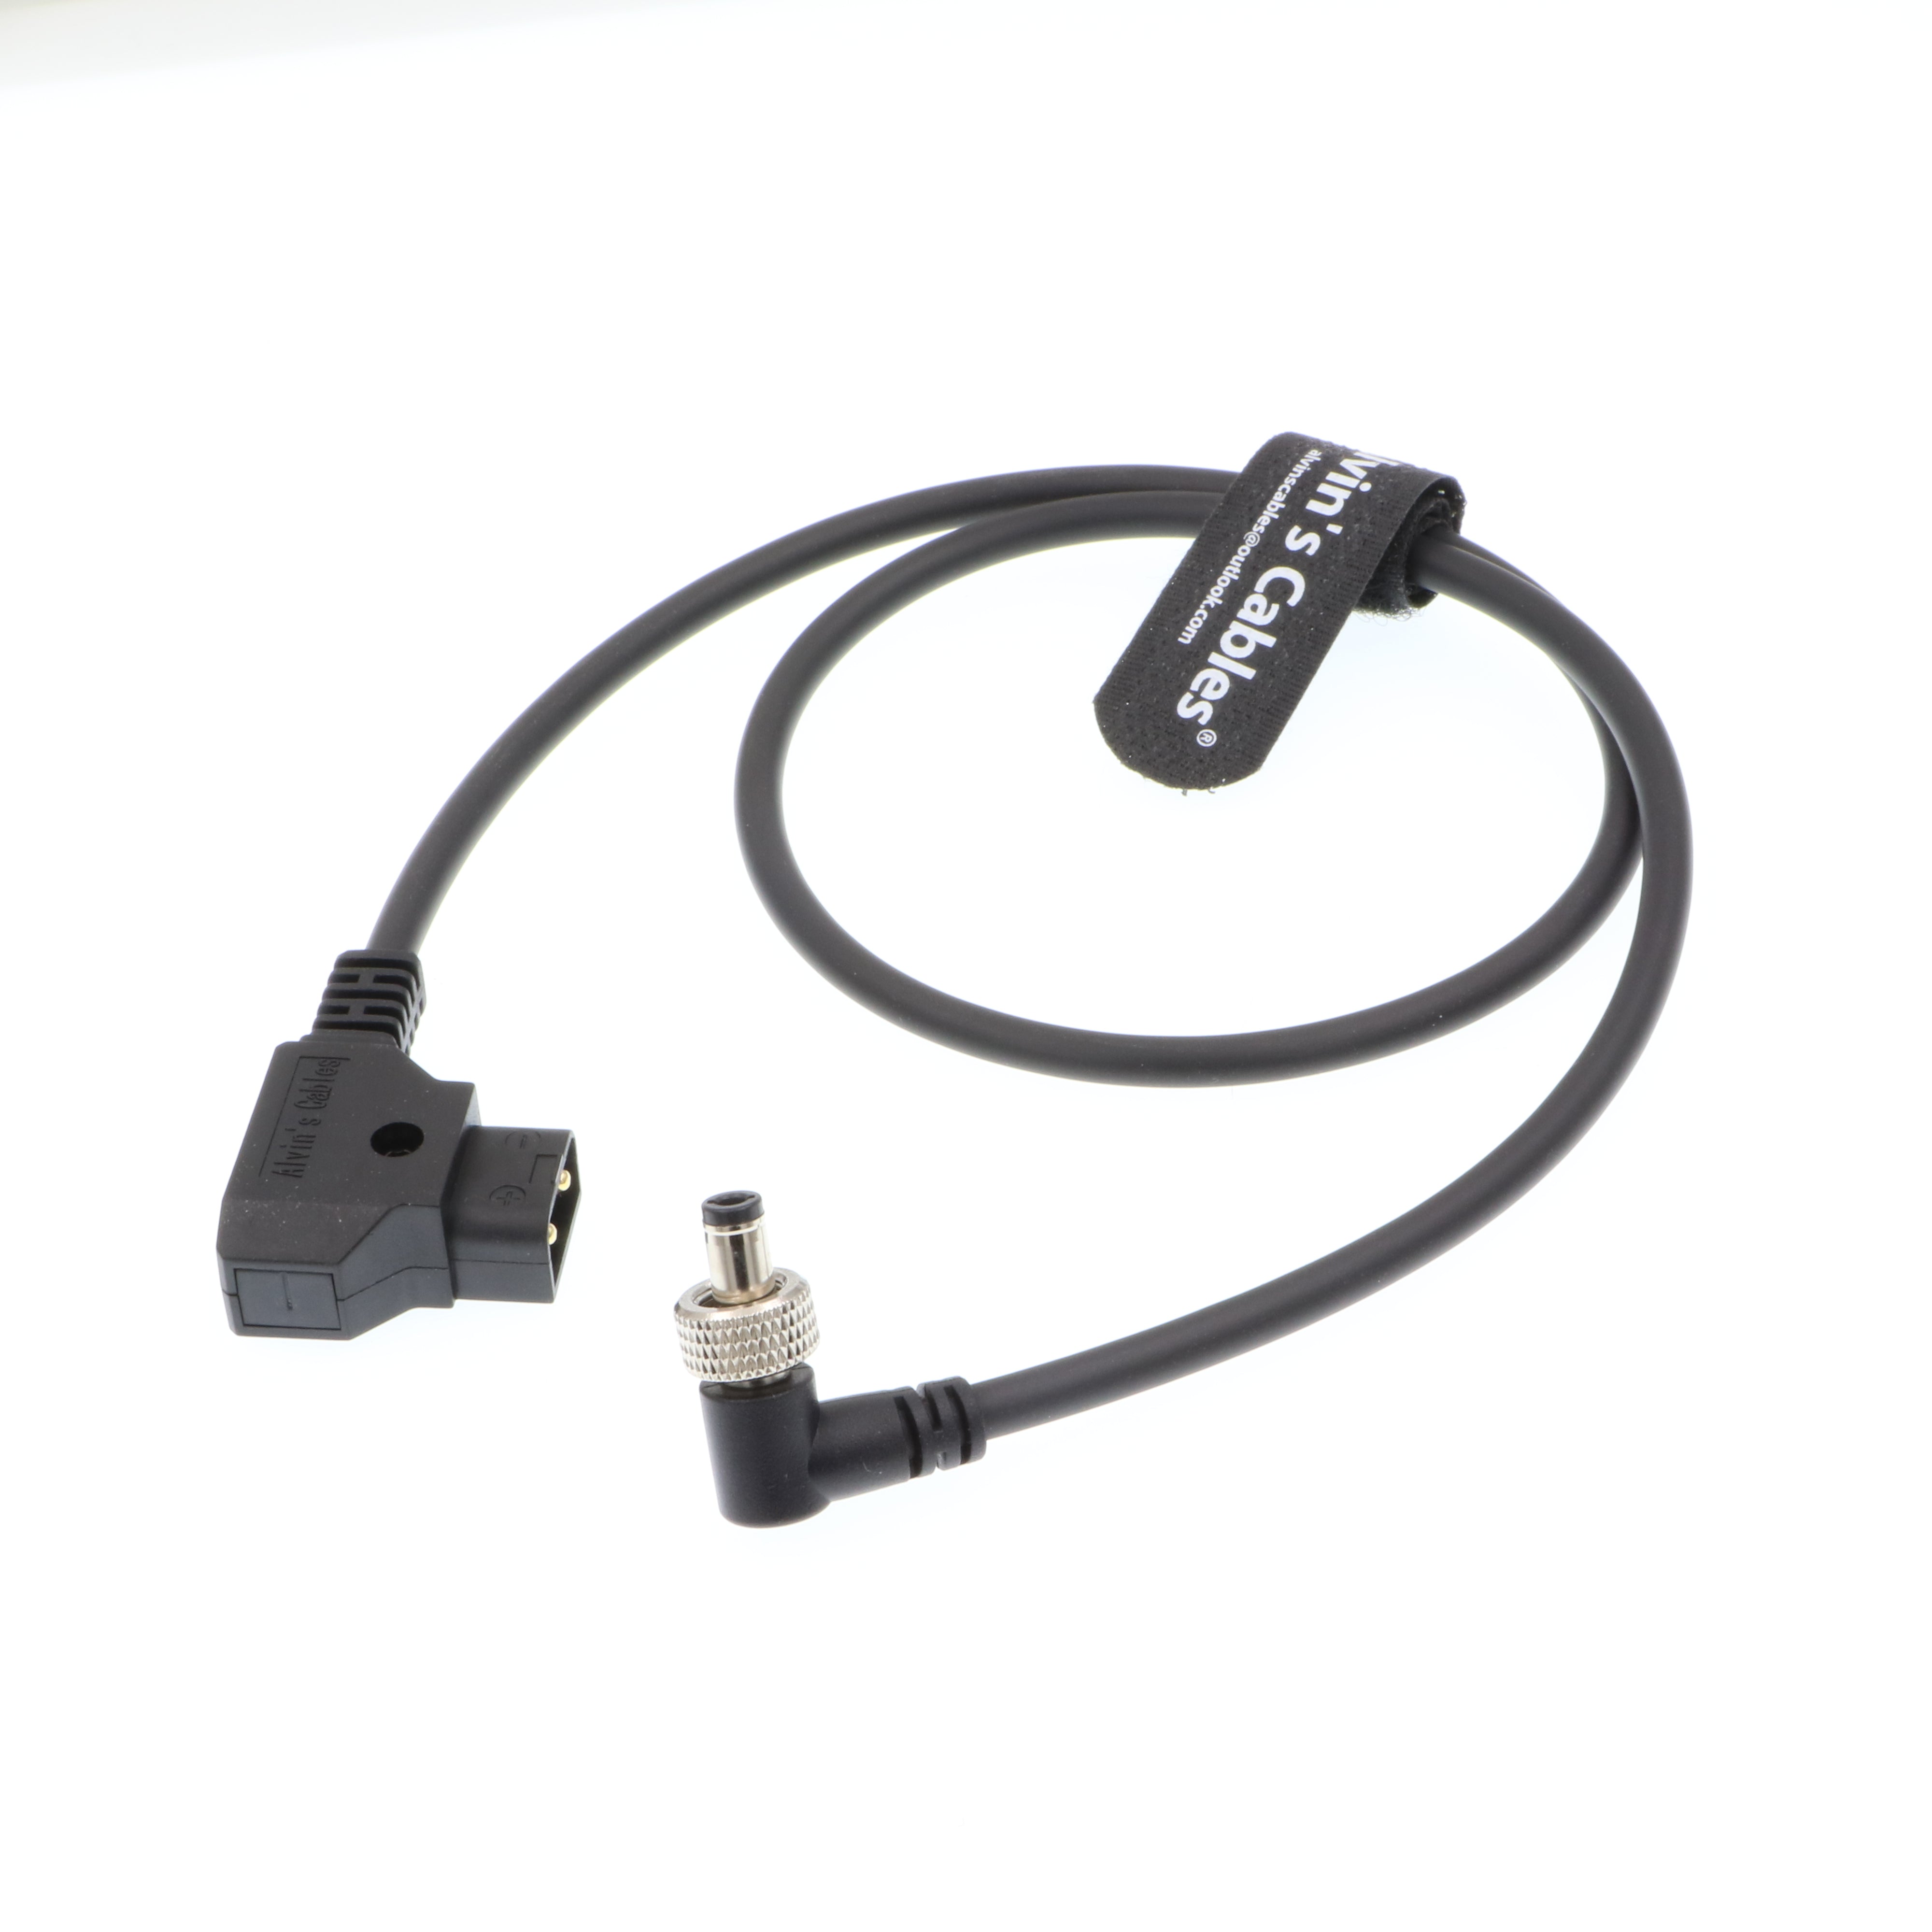 Alvin's Cables Atomos Monitor Stromkabel rechtwinkliger Locking DC 5.5 2.1 für Touchscreen-Display-Videogeräte PIX-E7 PIX-E5 Hollyland Mars 400s